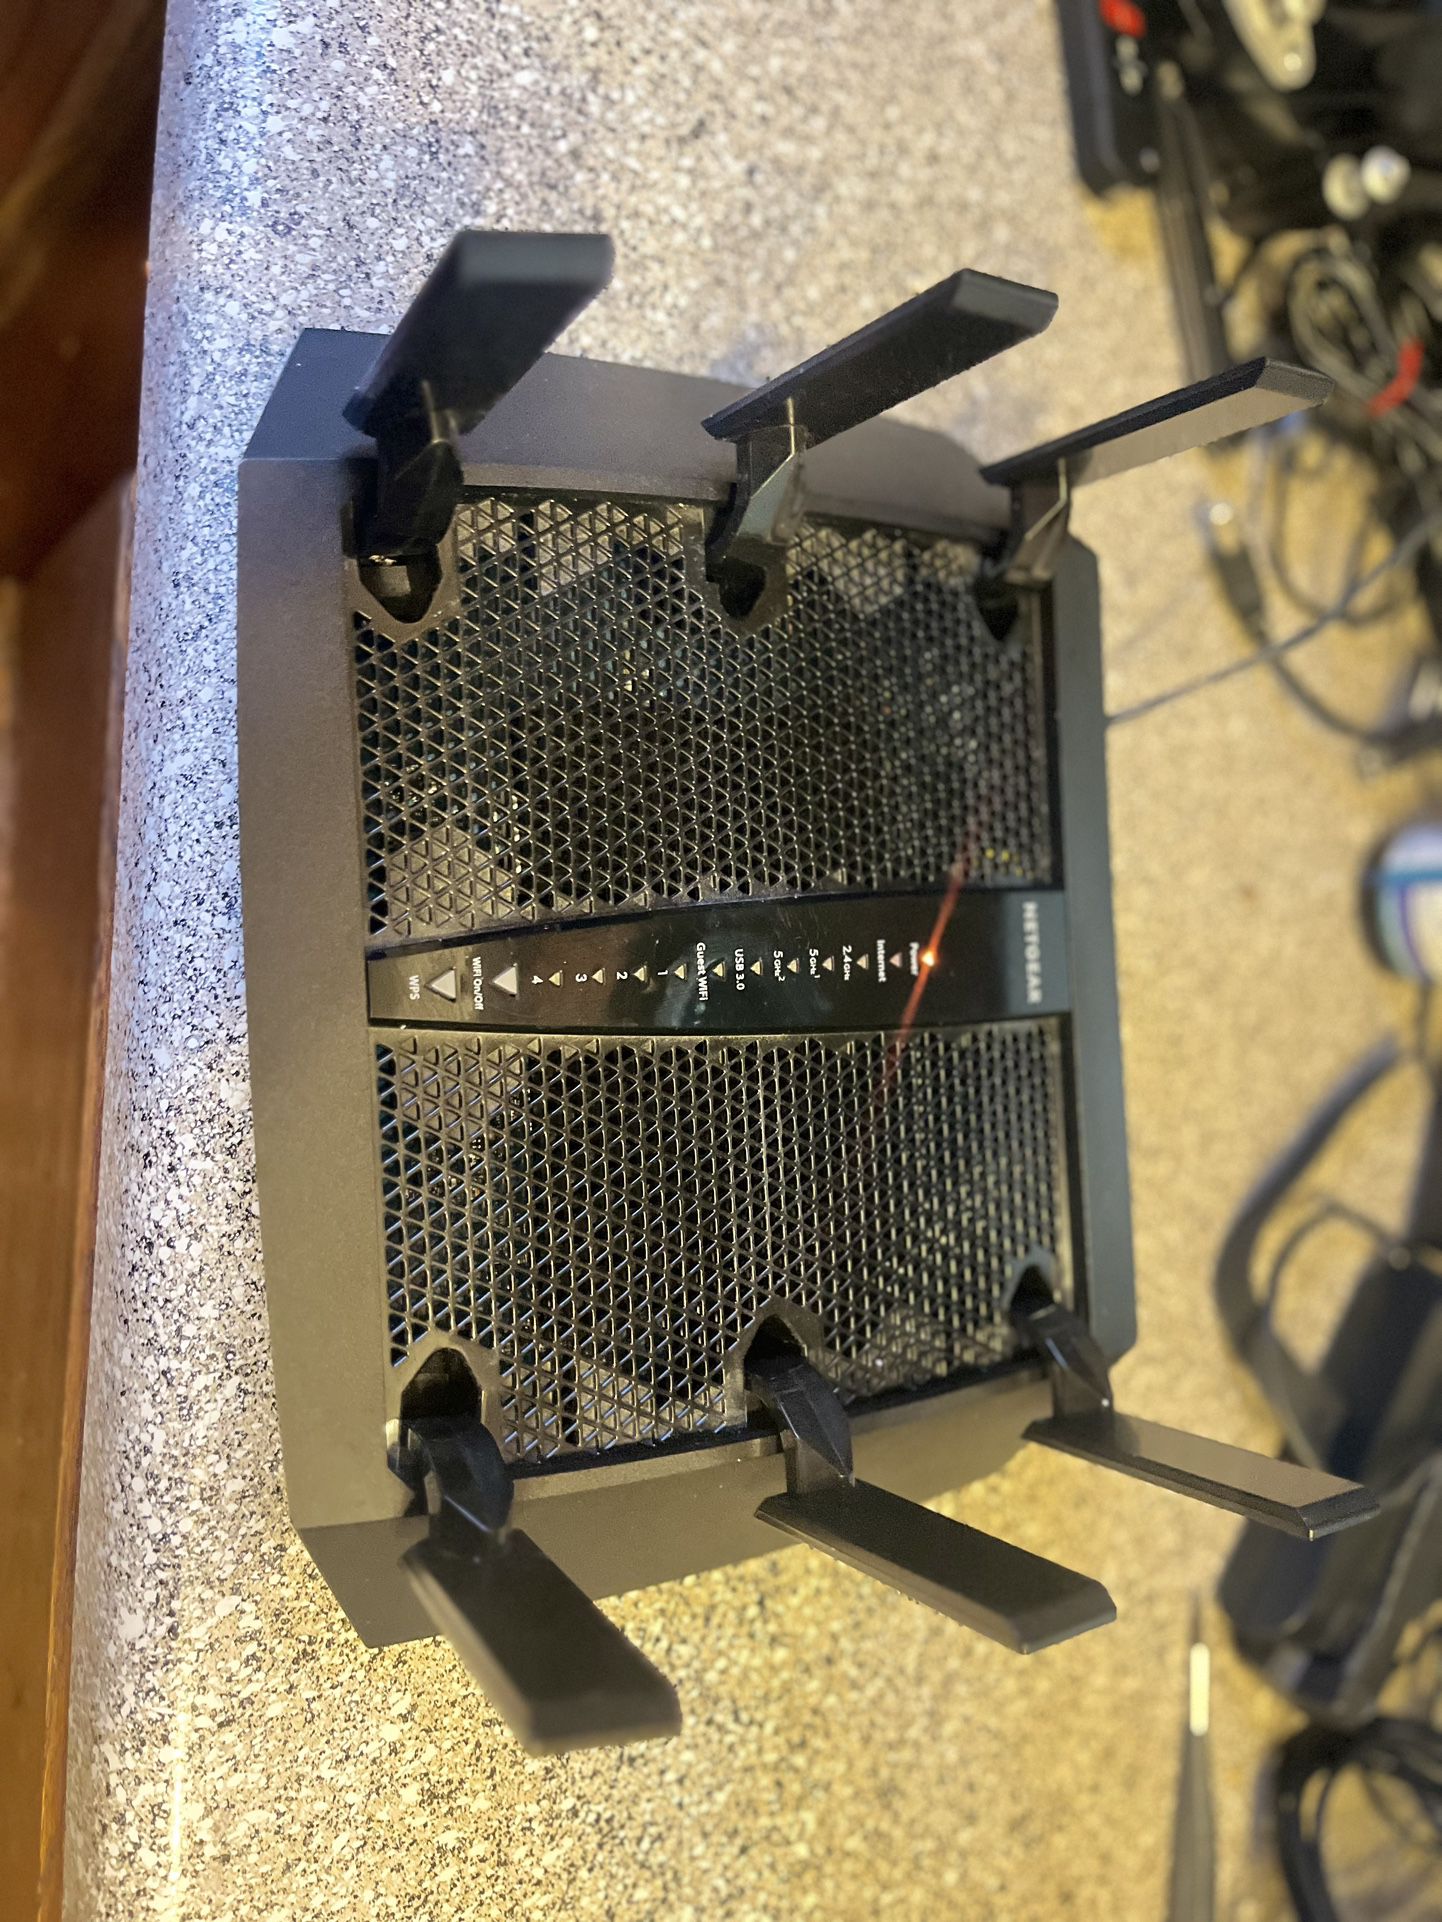 Netgear Nighthawk X6s Tri-band WiFi Router